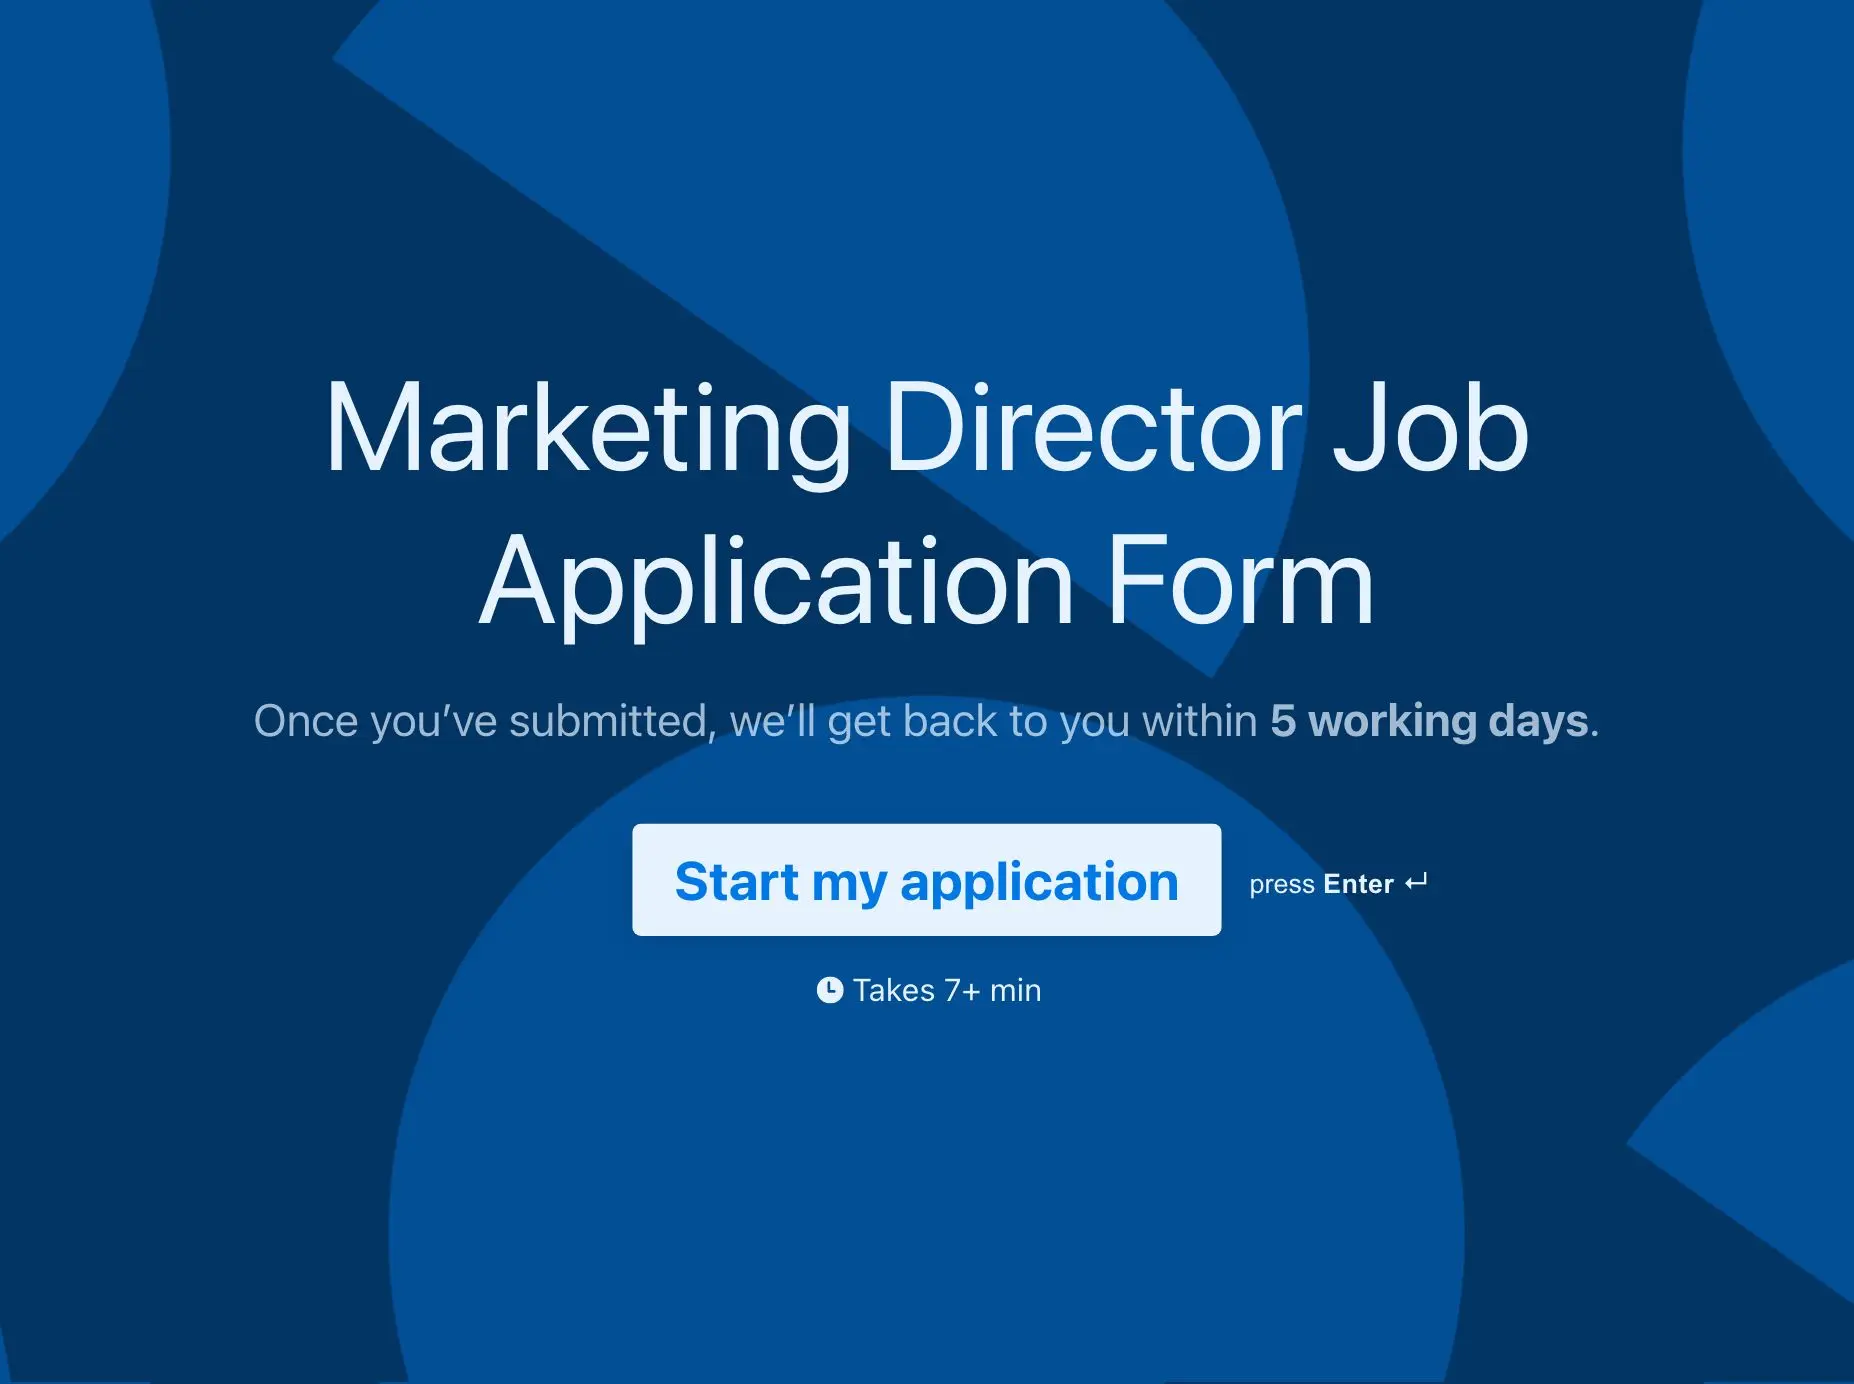 Marketing Director Job Application Form Template Hero